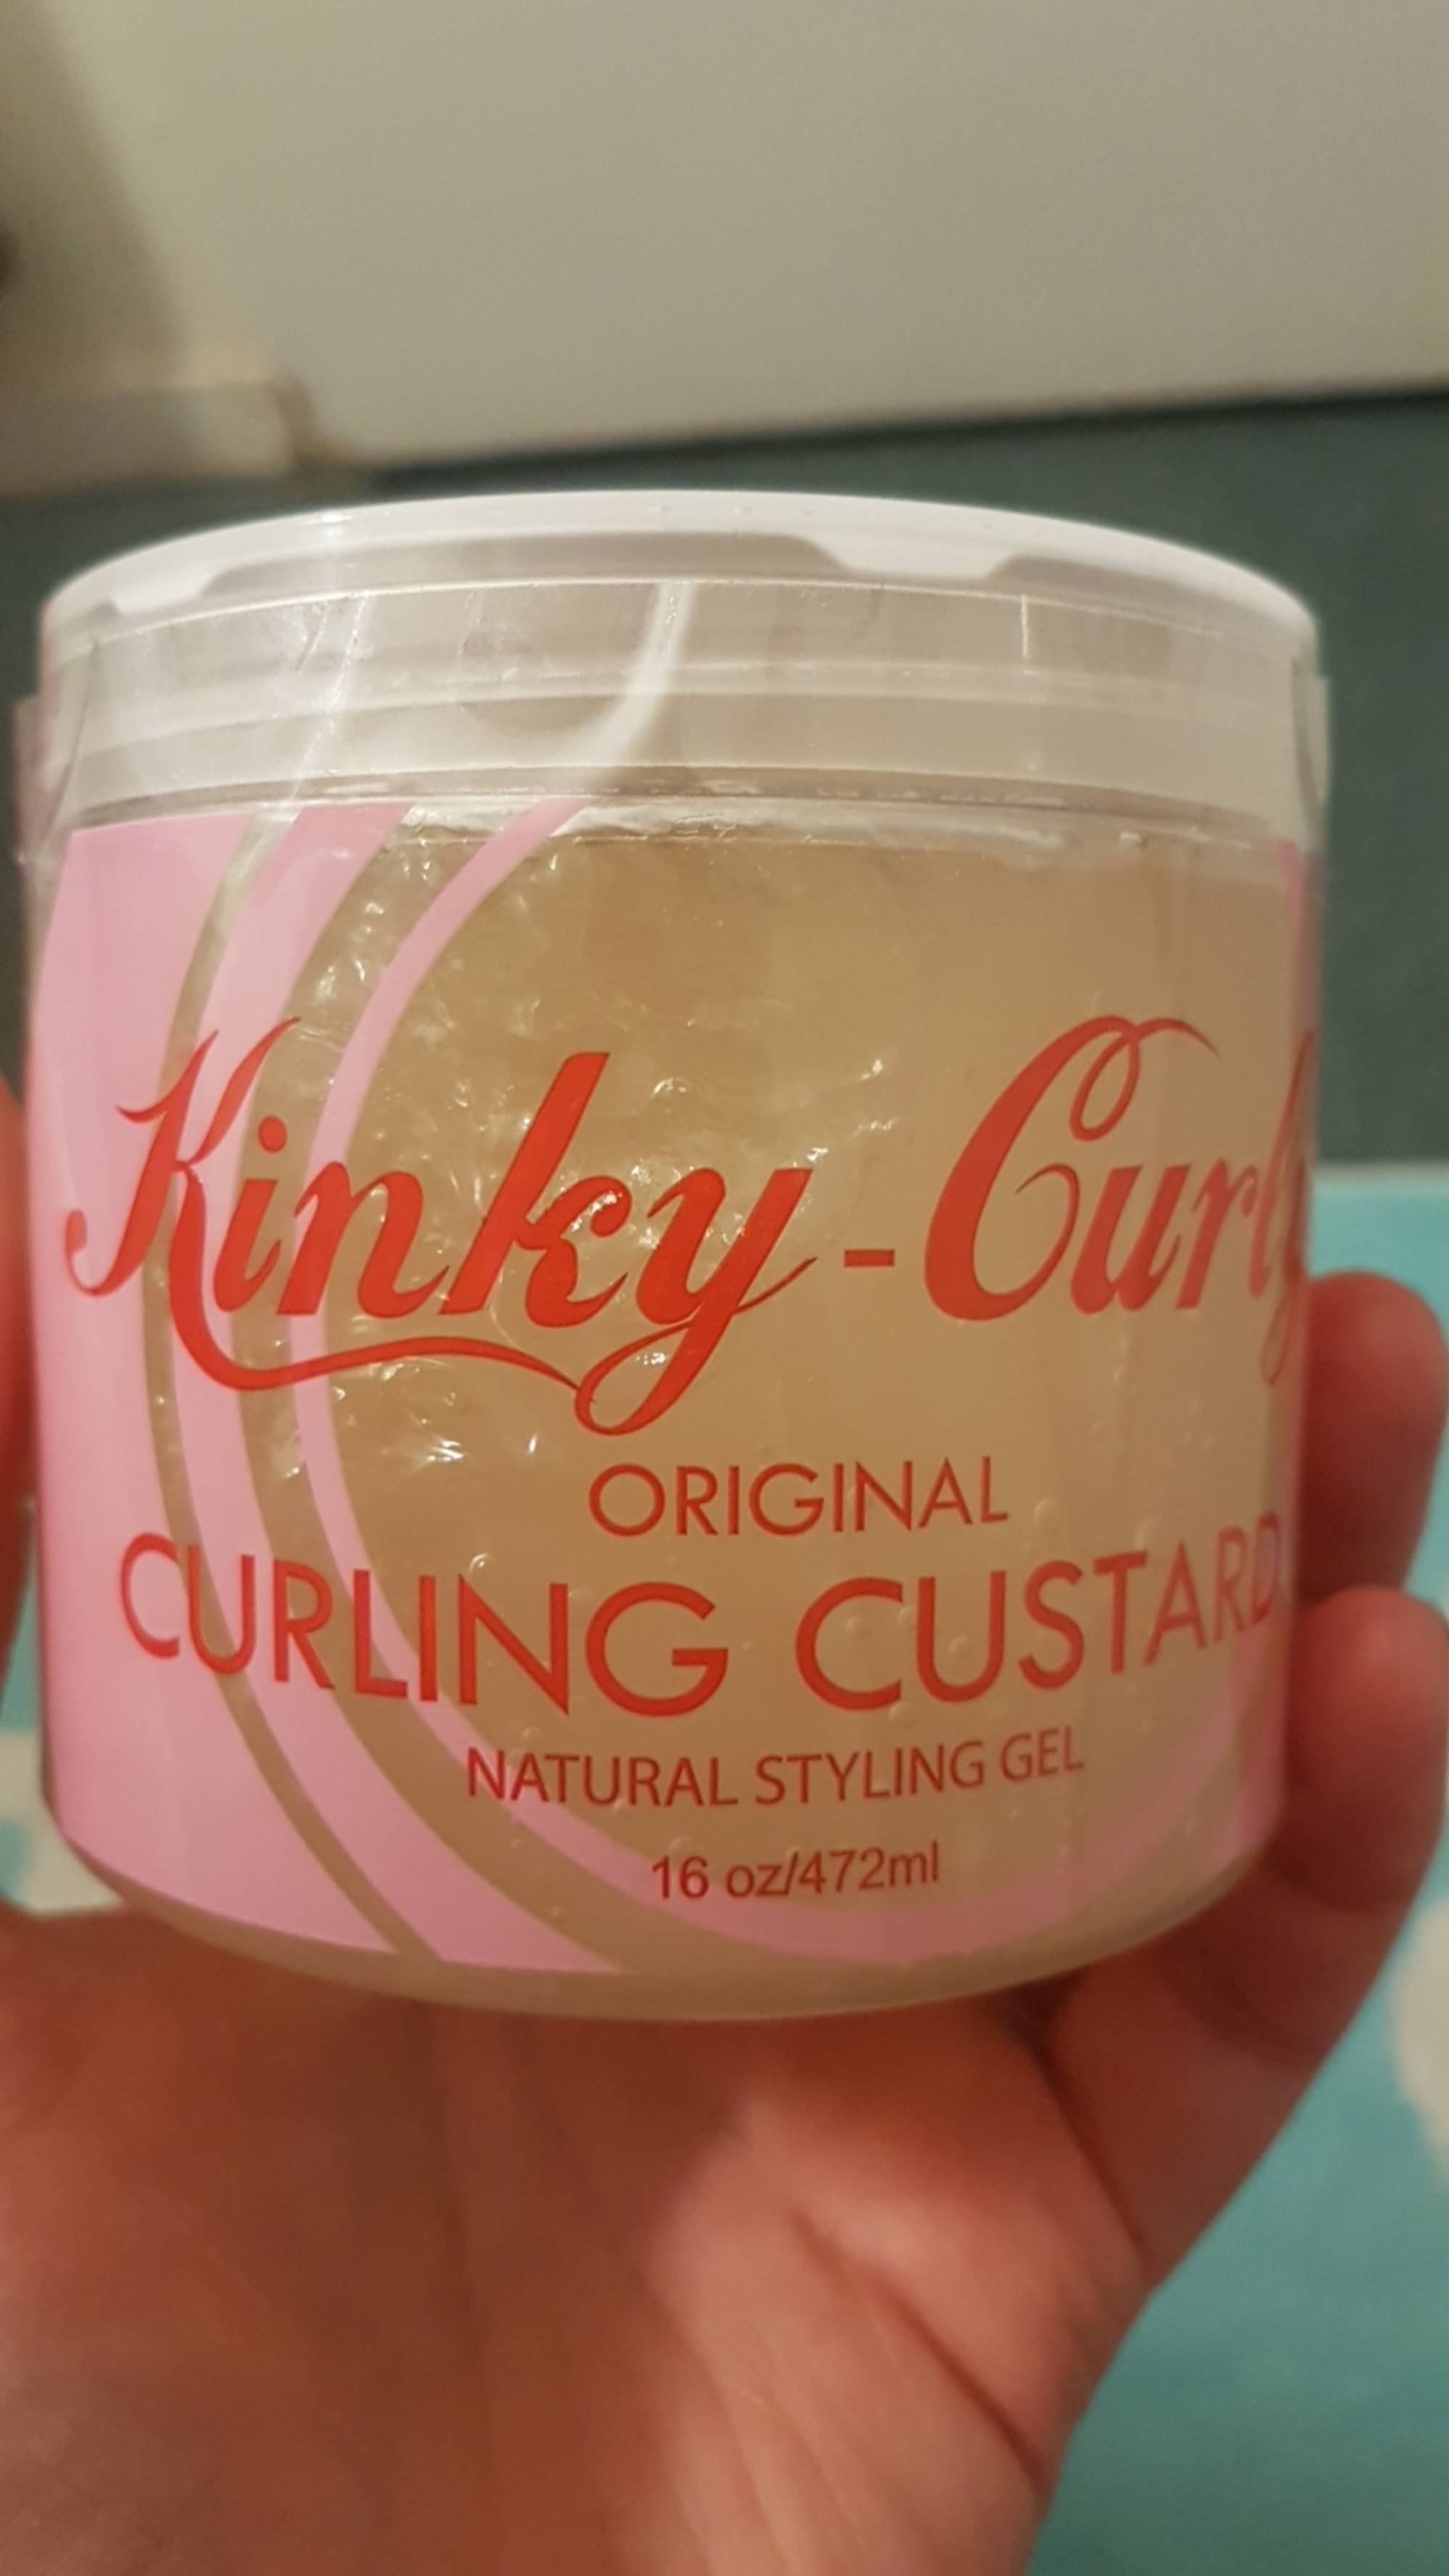 KINKY-CURLY - Original curling custard - Natural styling gel